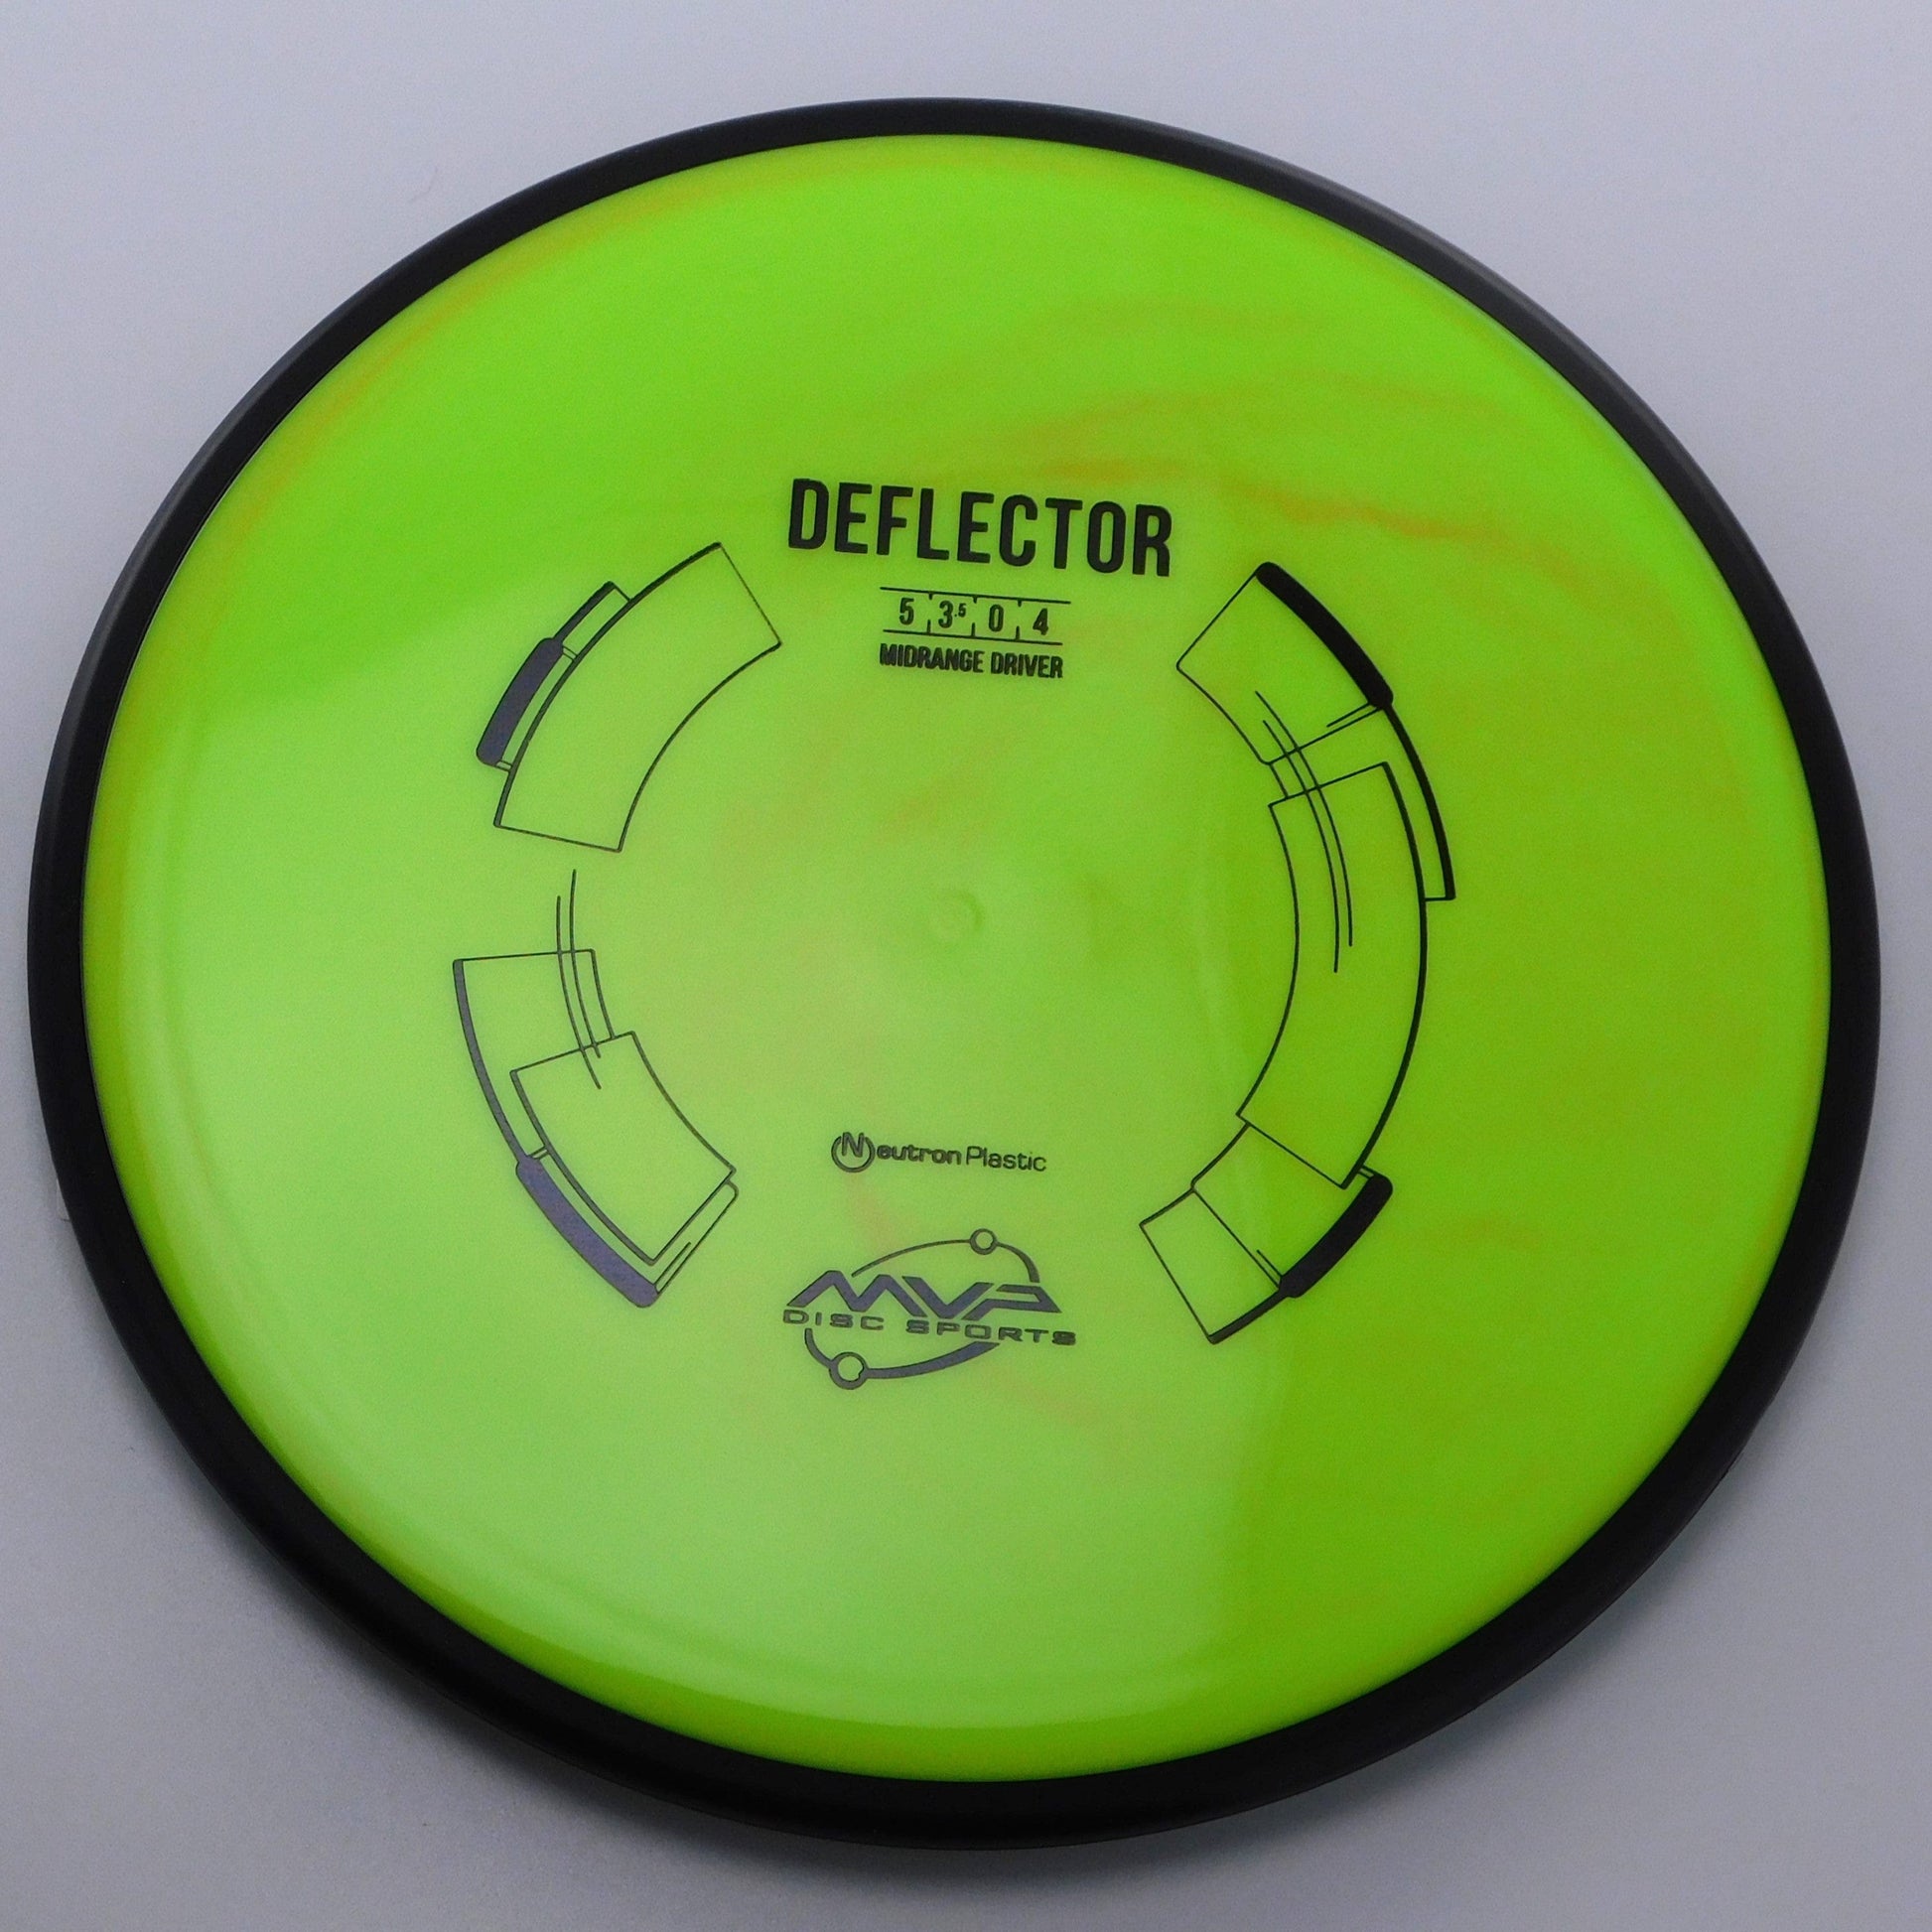 MVP Deflector - Neutron 5│3.5│0│4 177.8g - Green - MVP Deflector - Neutron - 100460